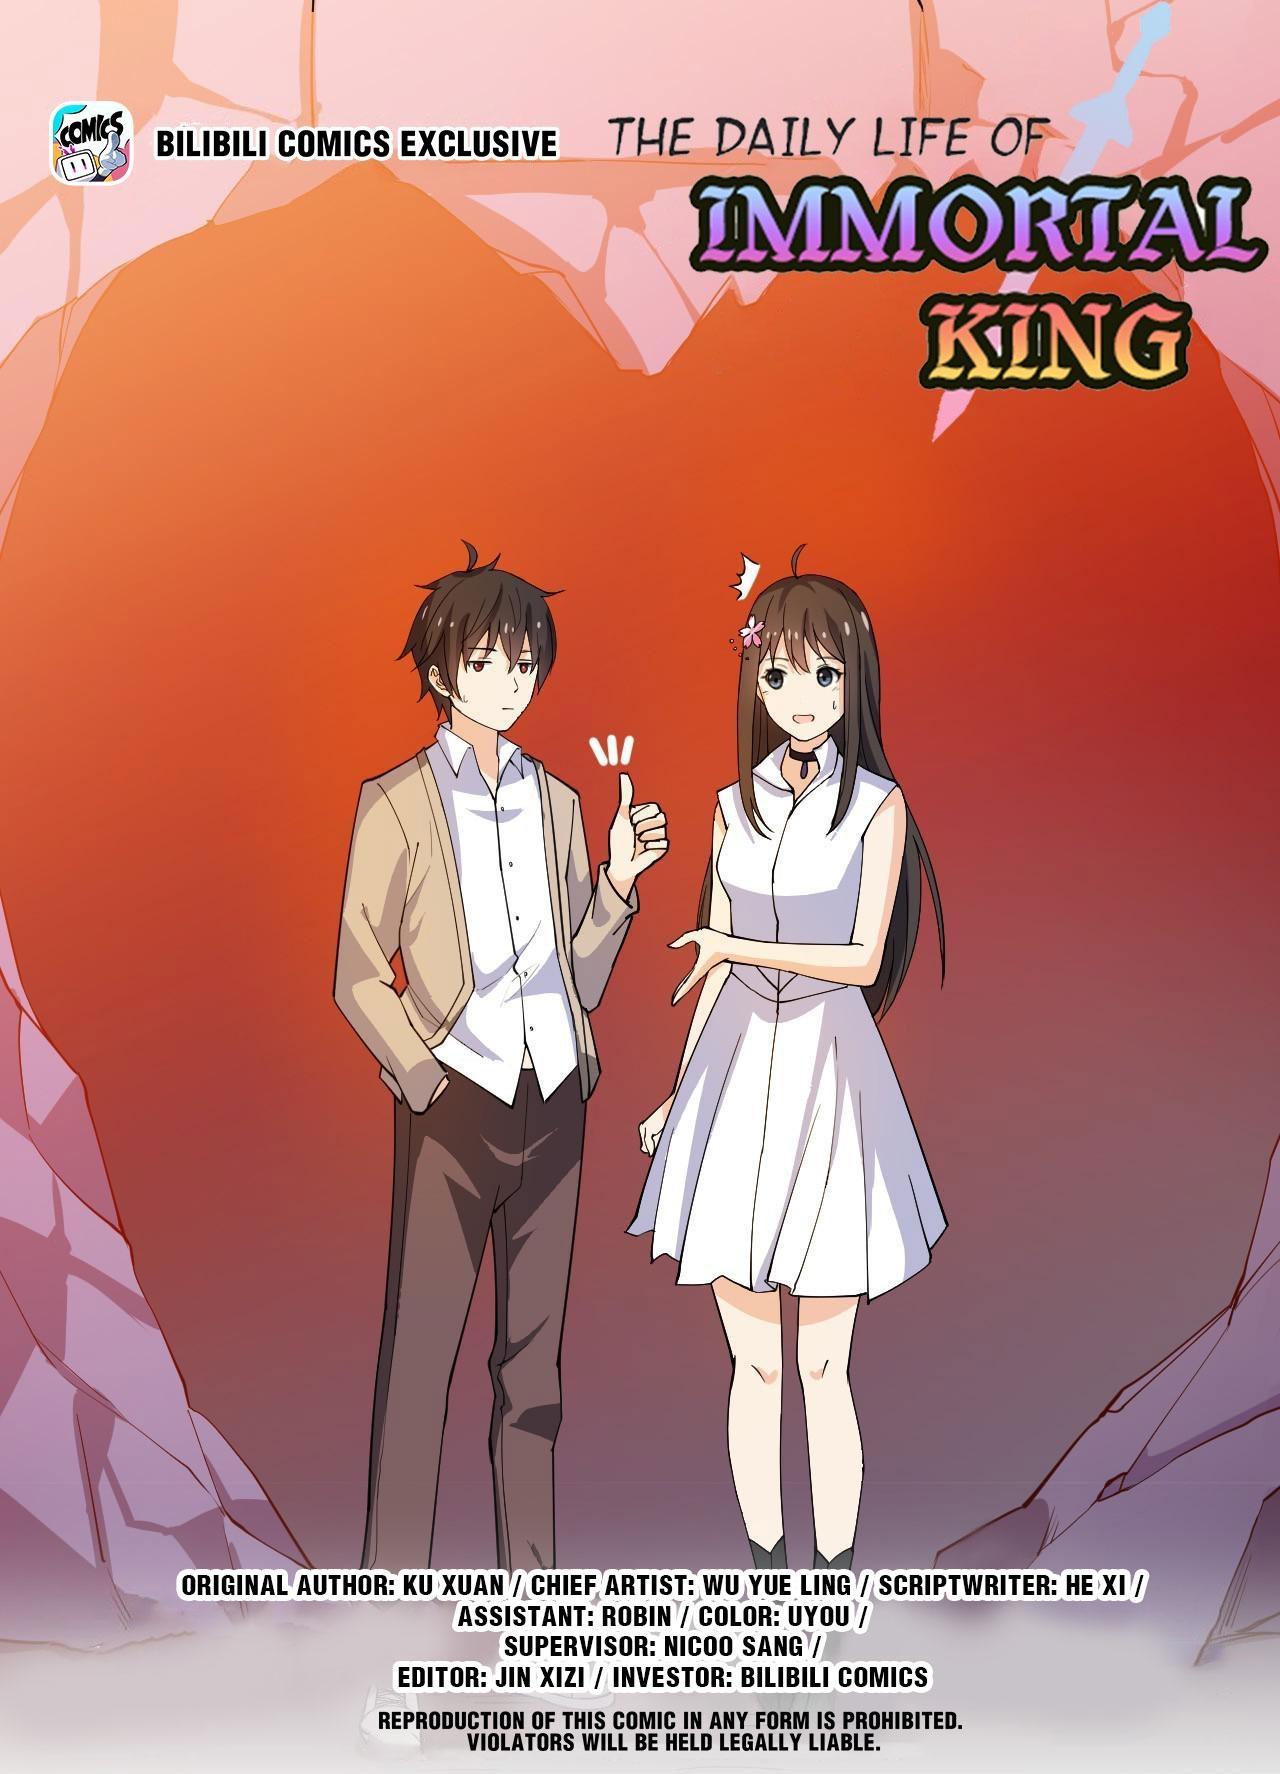 The Daily Life of the Immortal King Manga